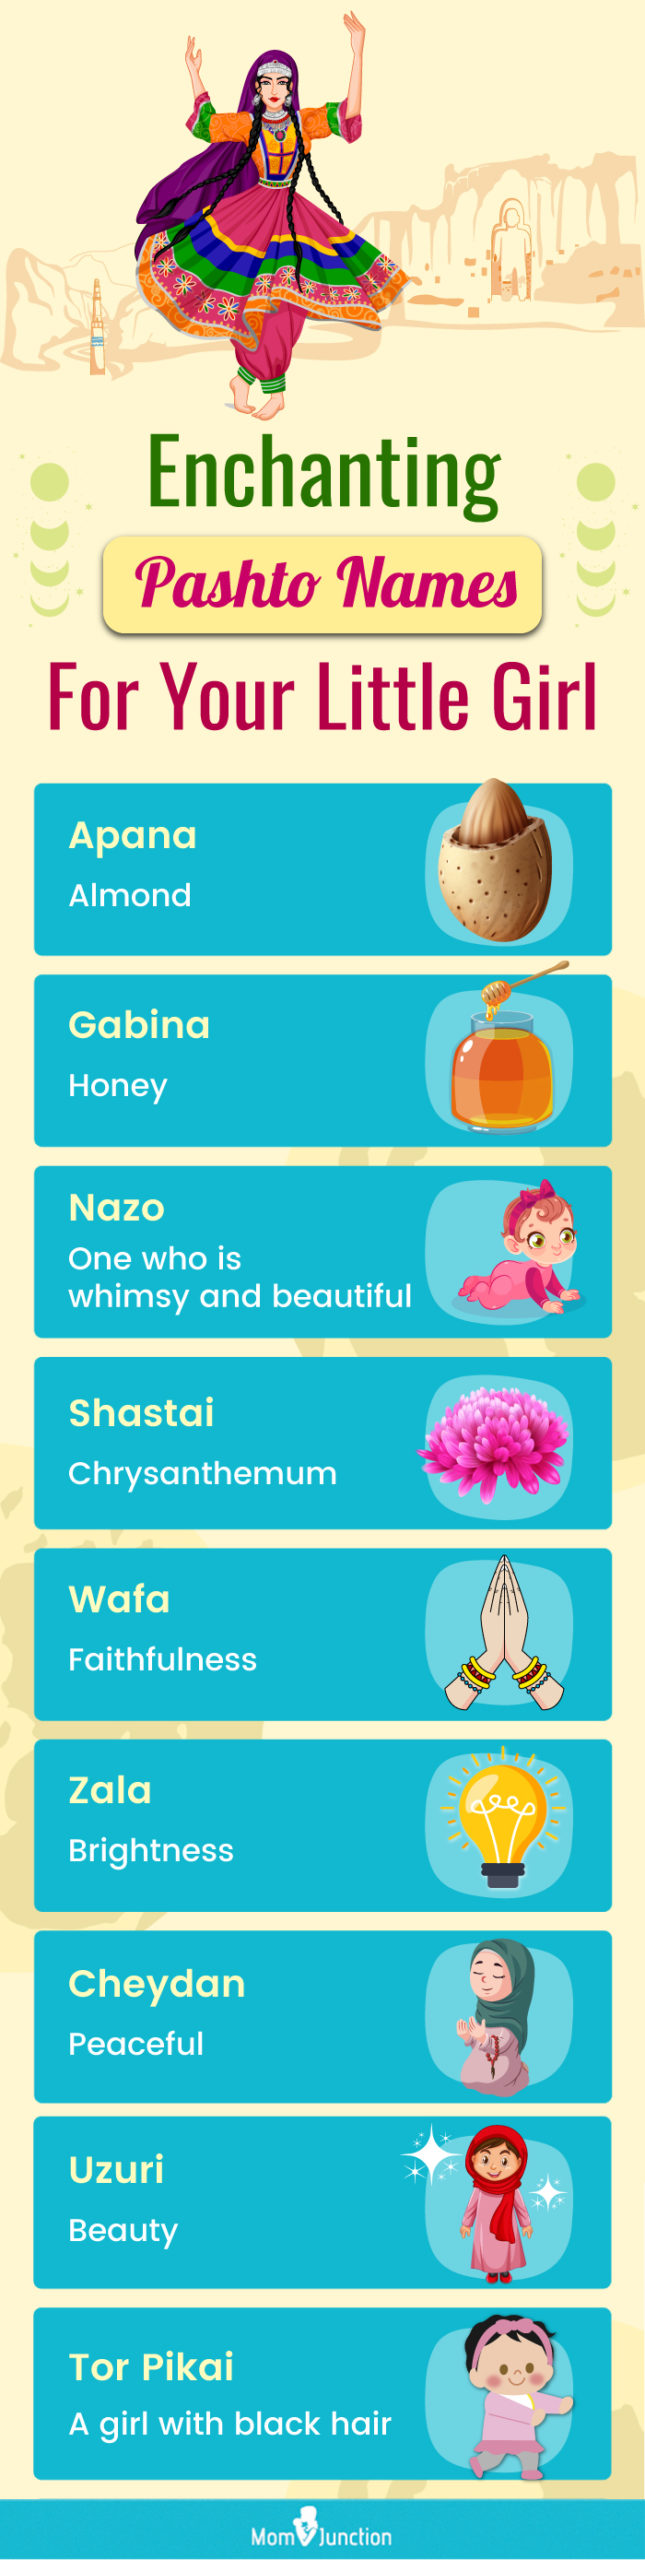 enchanting pashto names for your little girl (infographic)